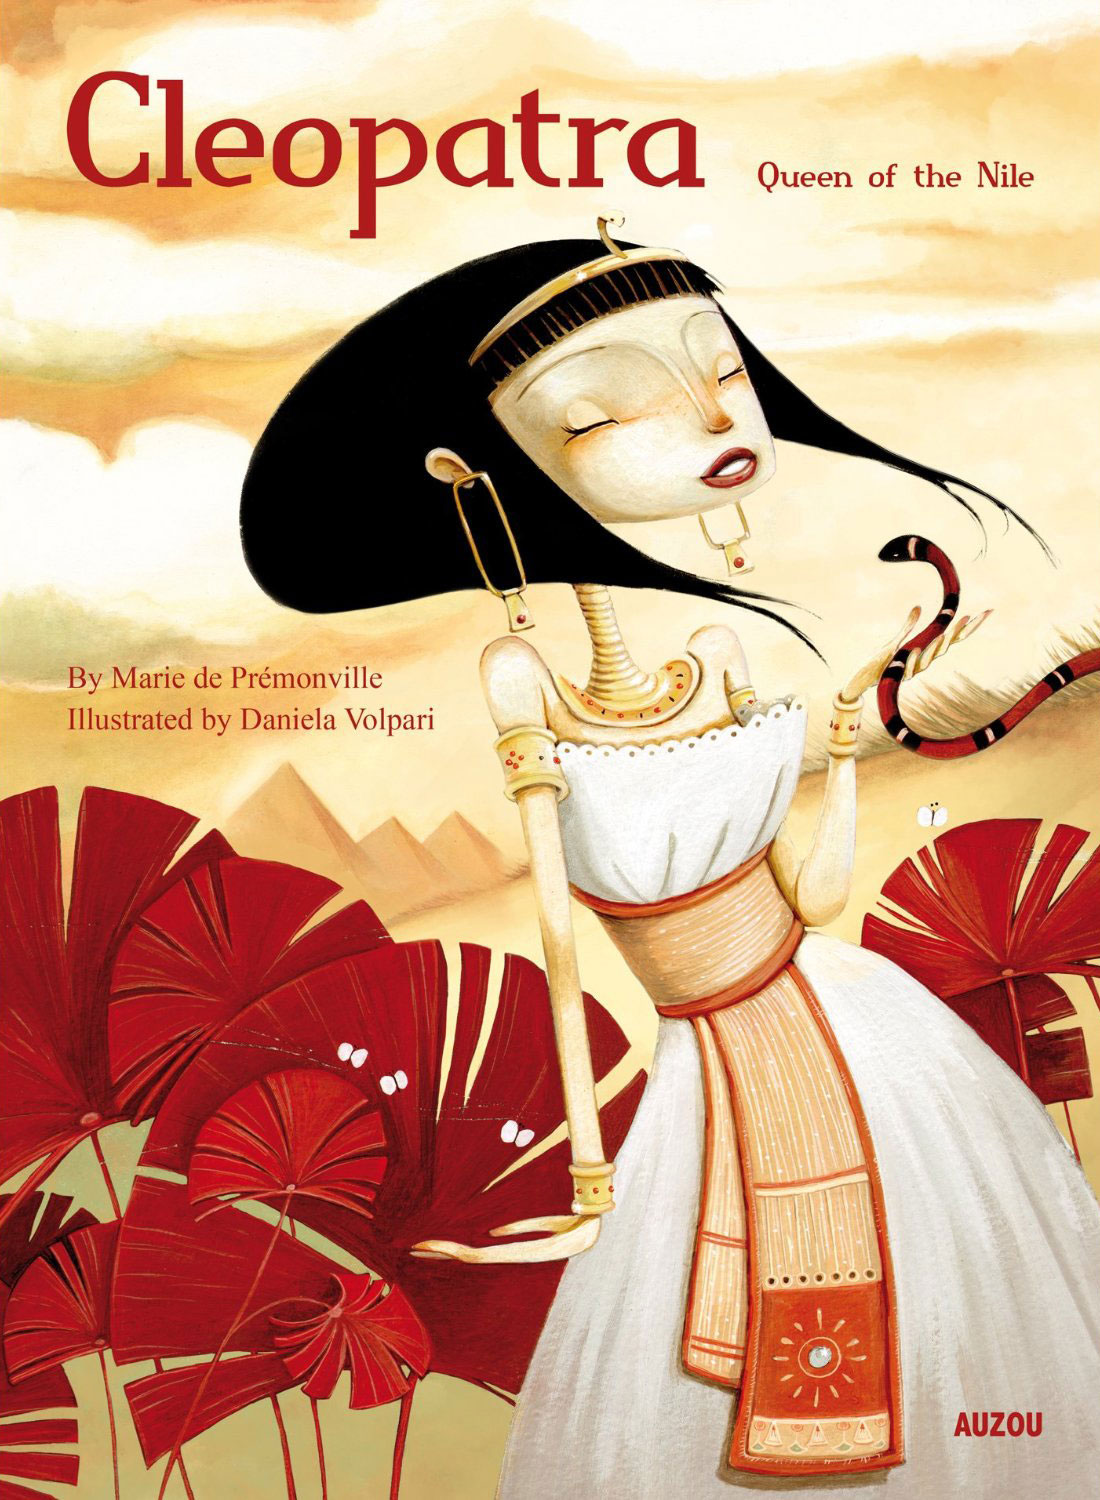 cleopatra auzou children book Daniela Volpari story egypt